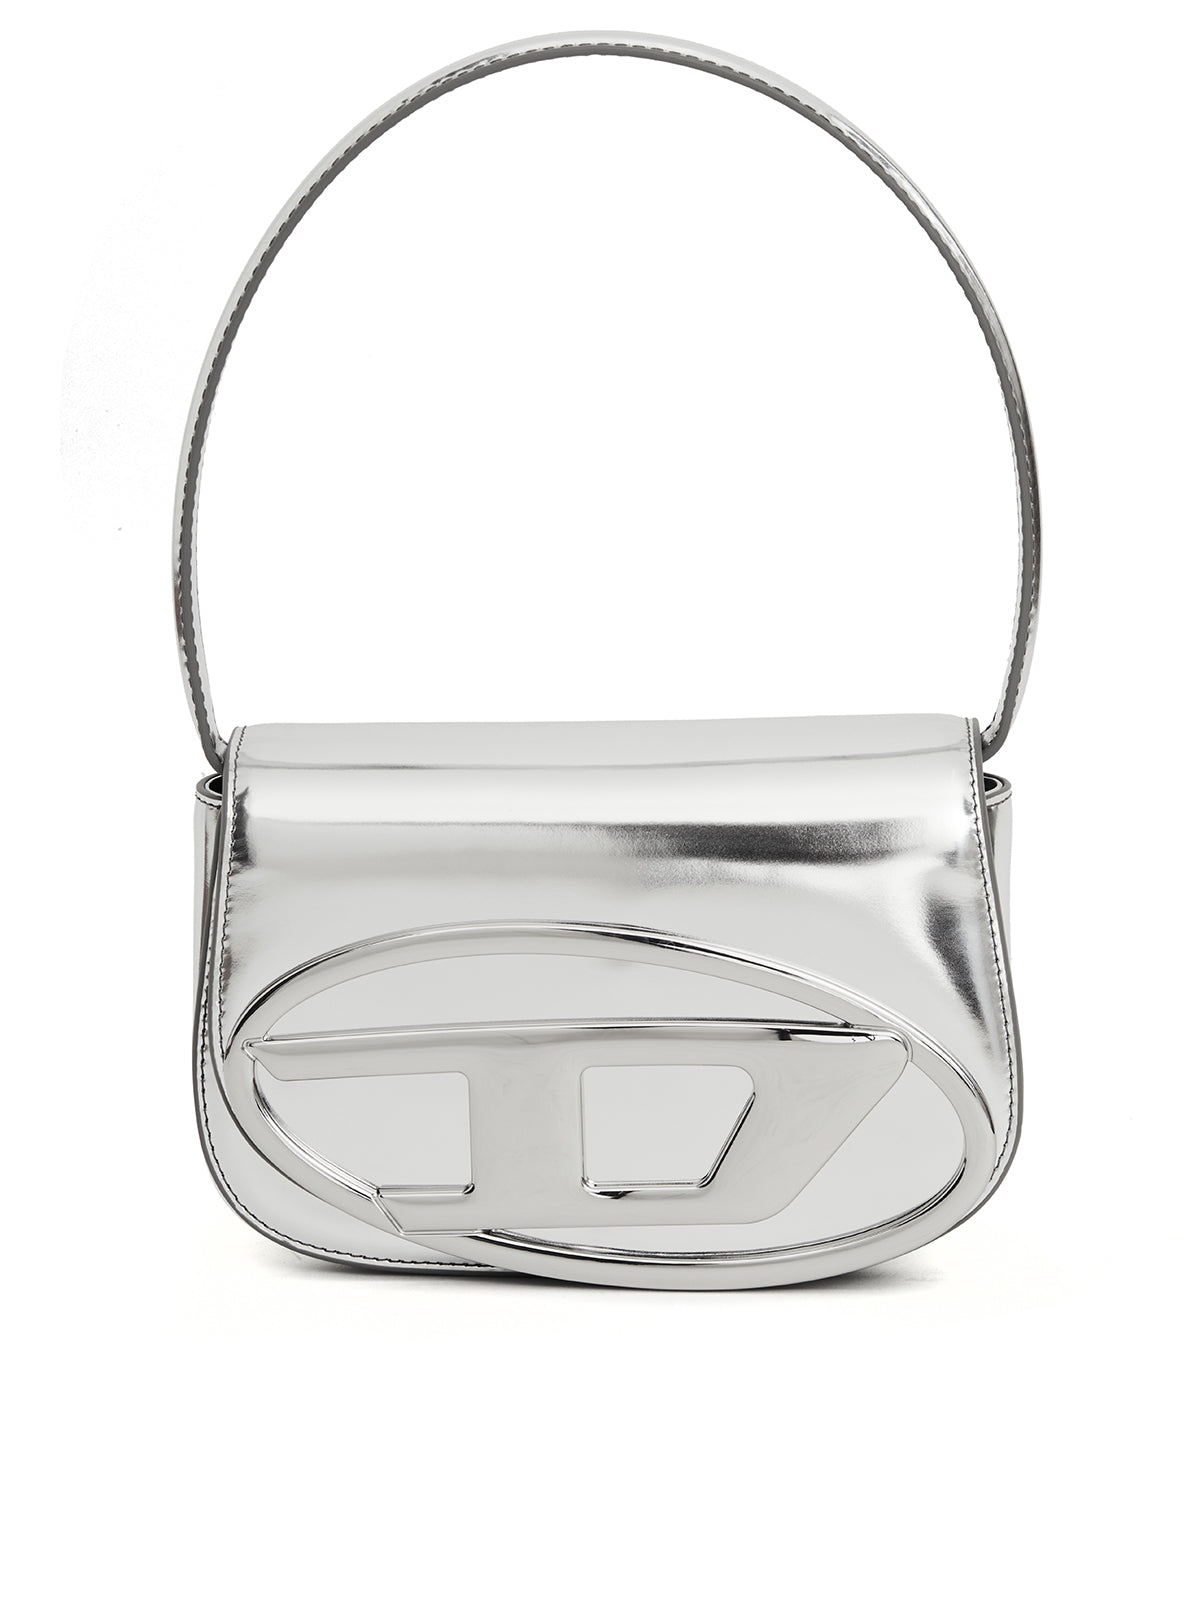 Diesel Silver Leather Mirror Shoulder Handbag For Women In Gray